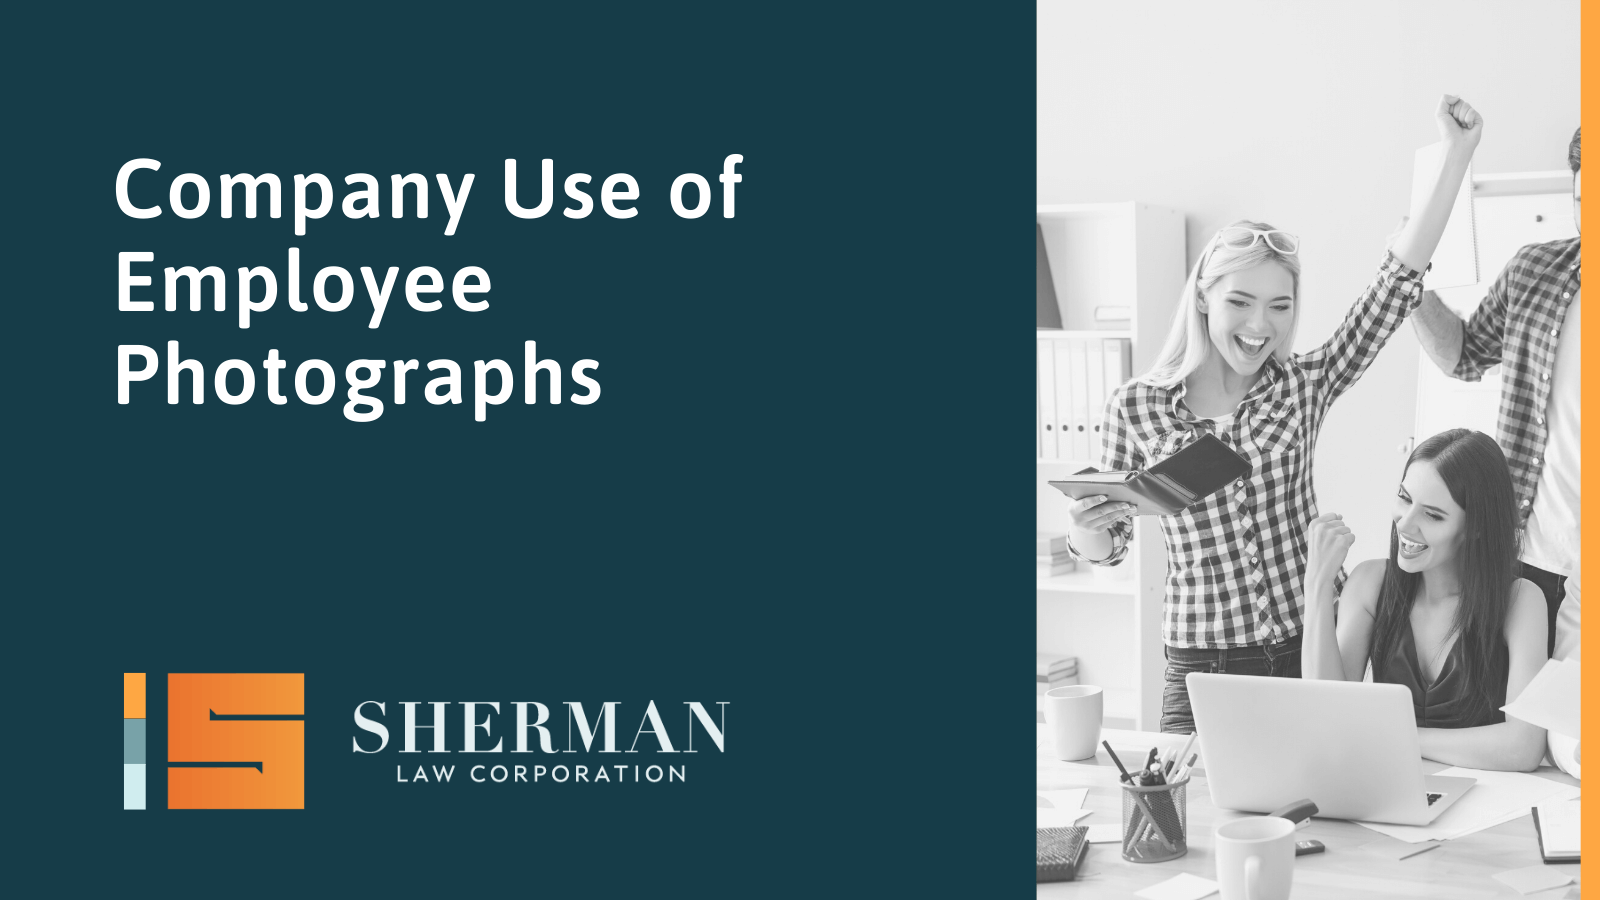 Company Use of Employee Photographs- sherman law corporation